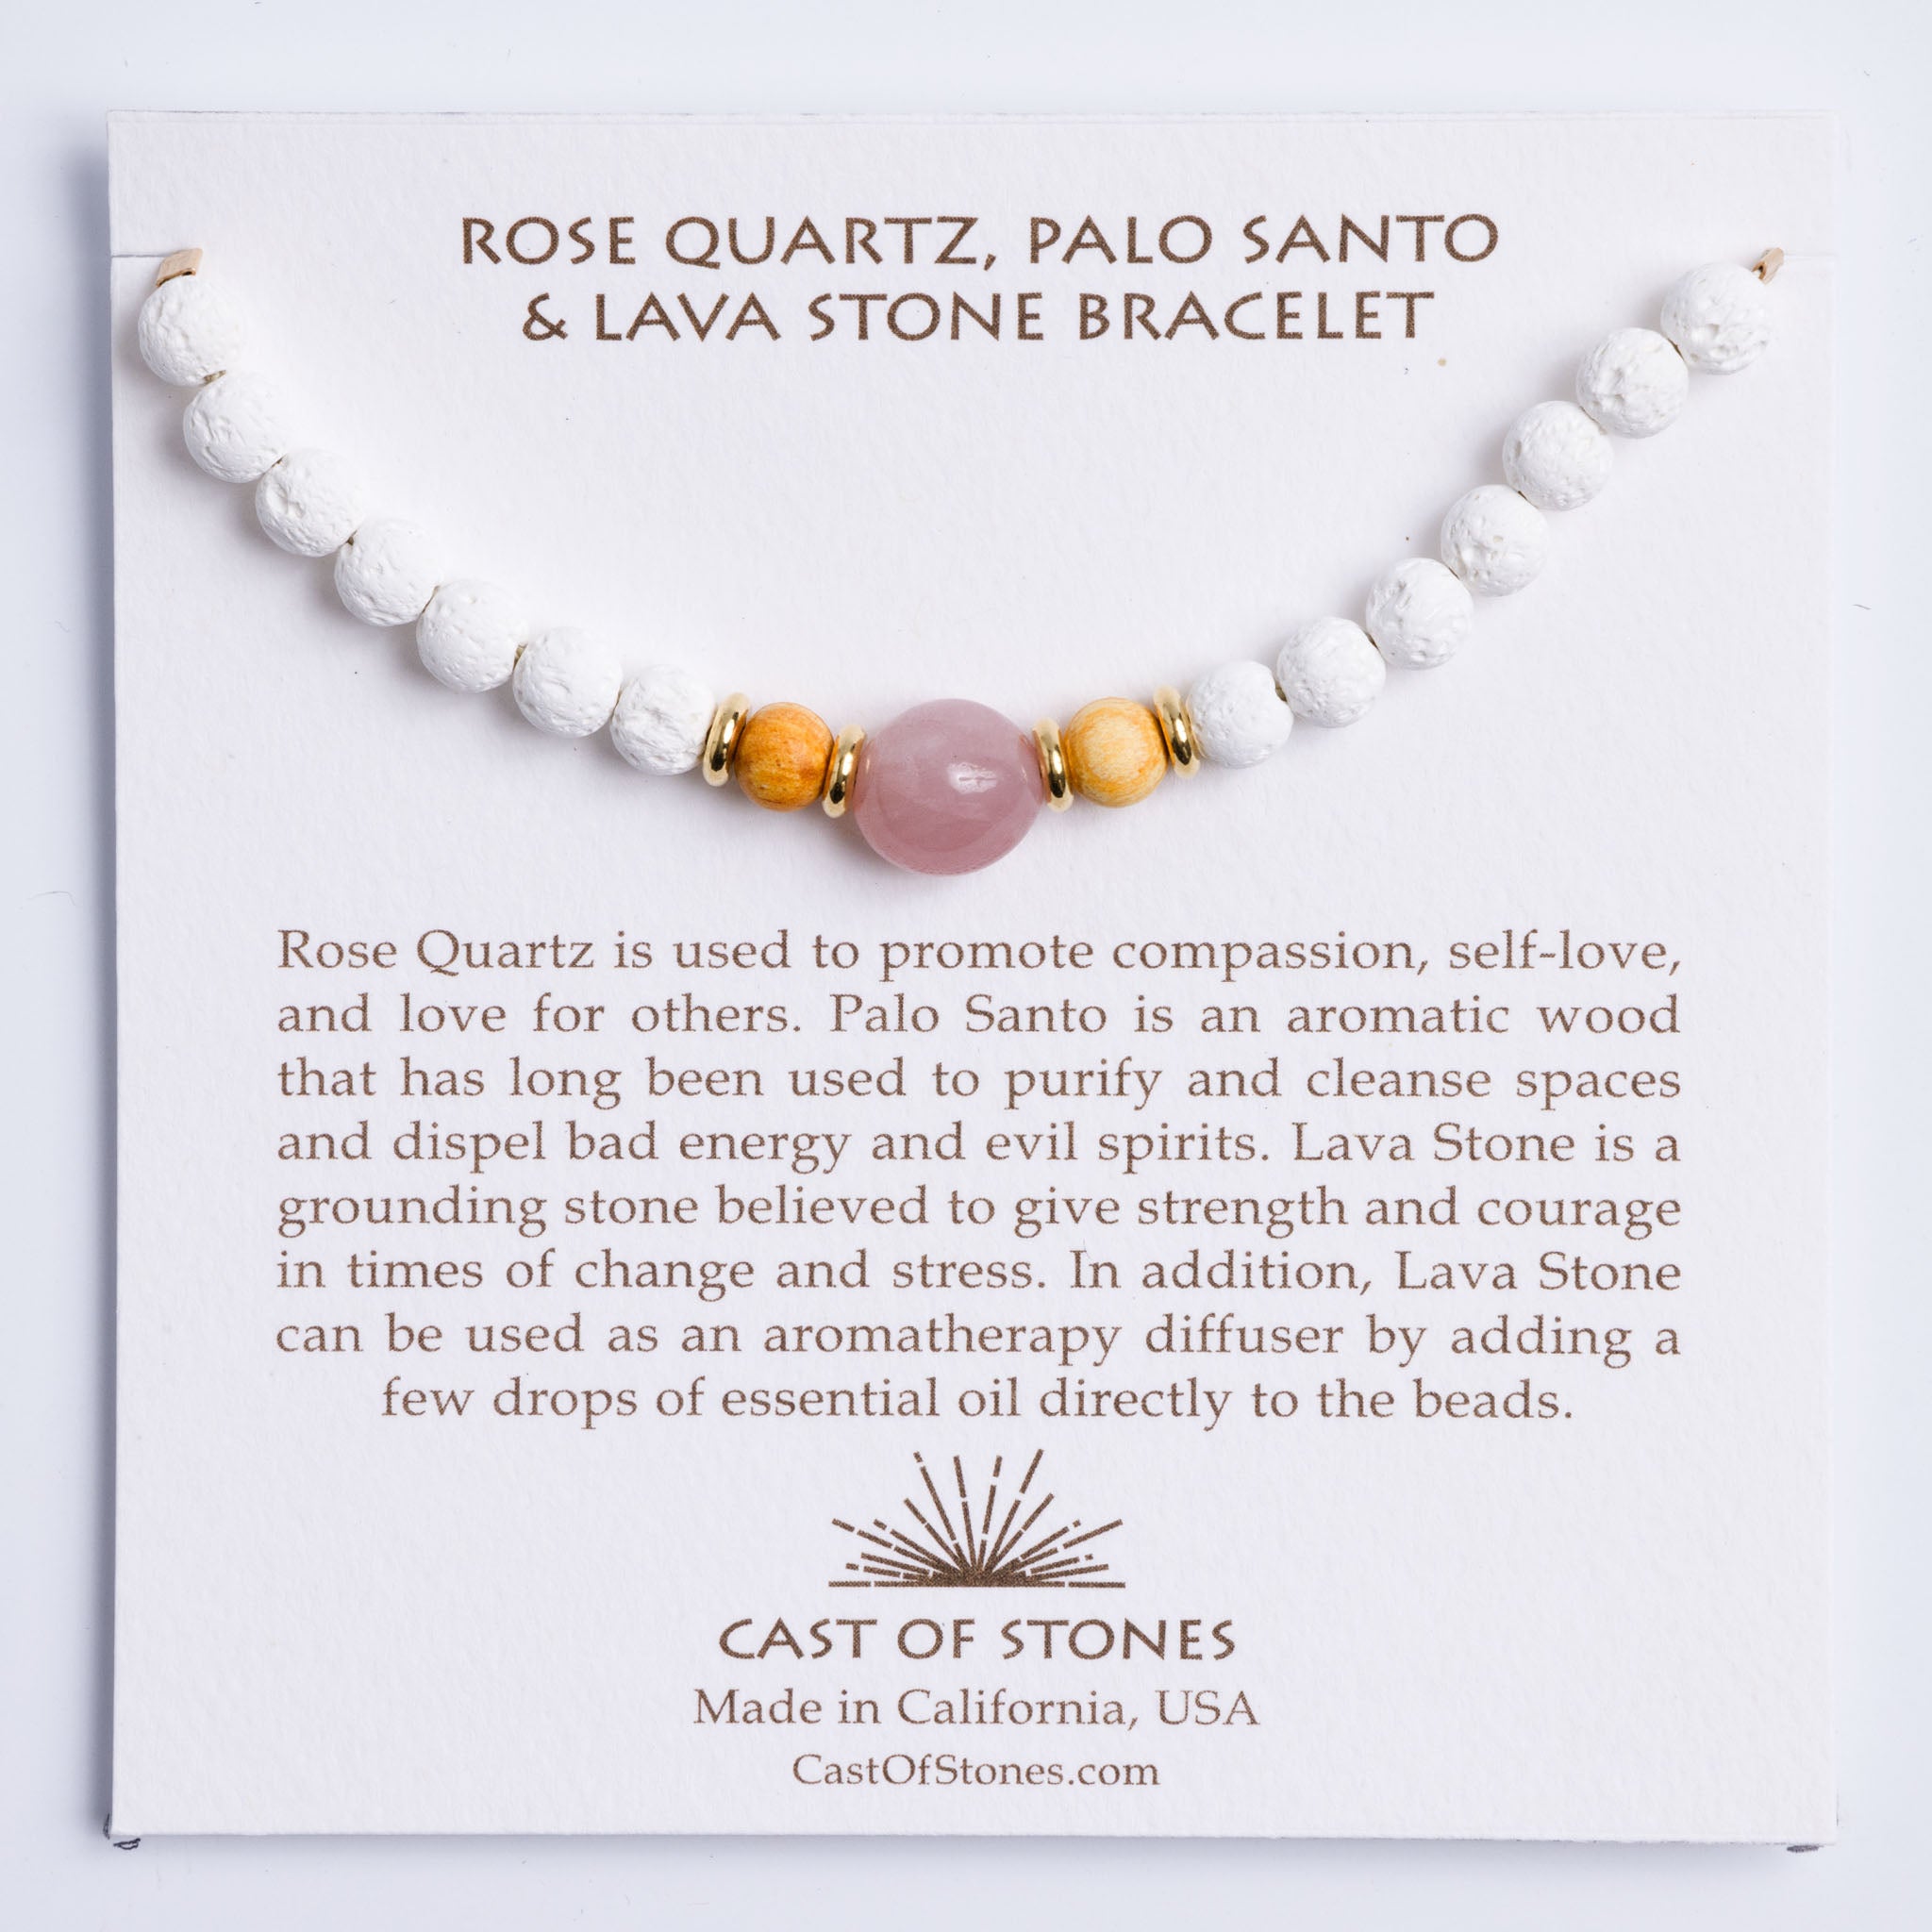 Rose Quartz, Palo Santo & Lava Stone Bracelet